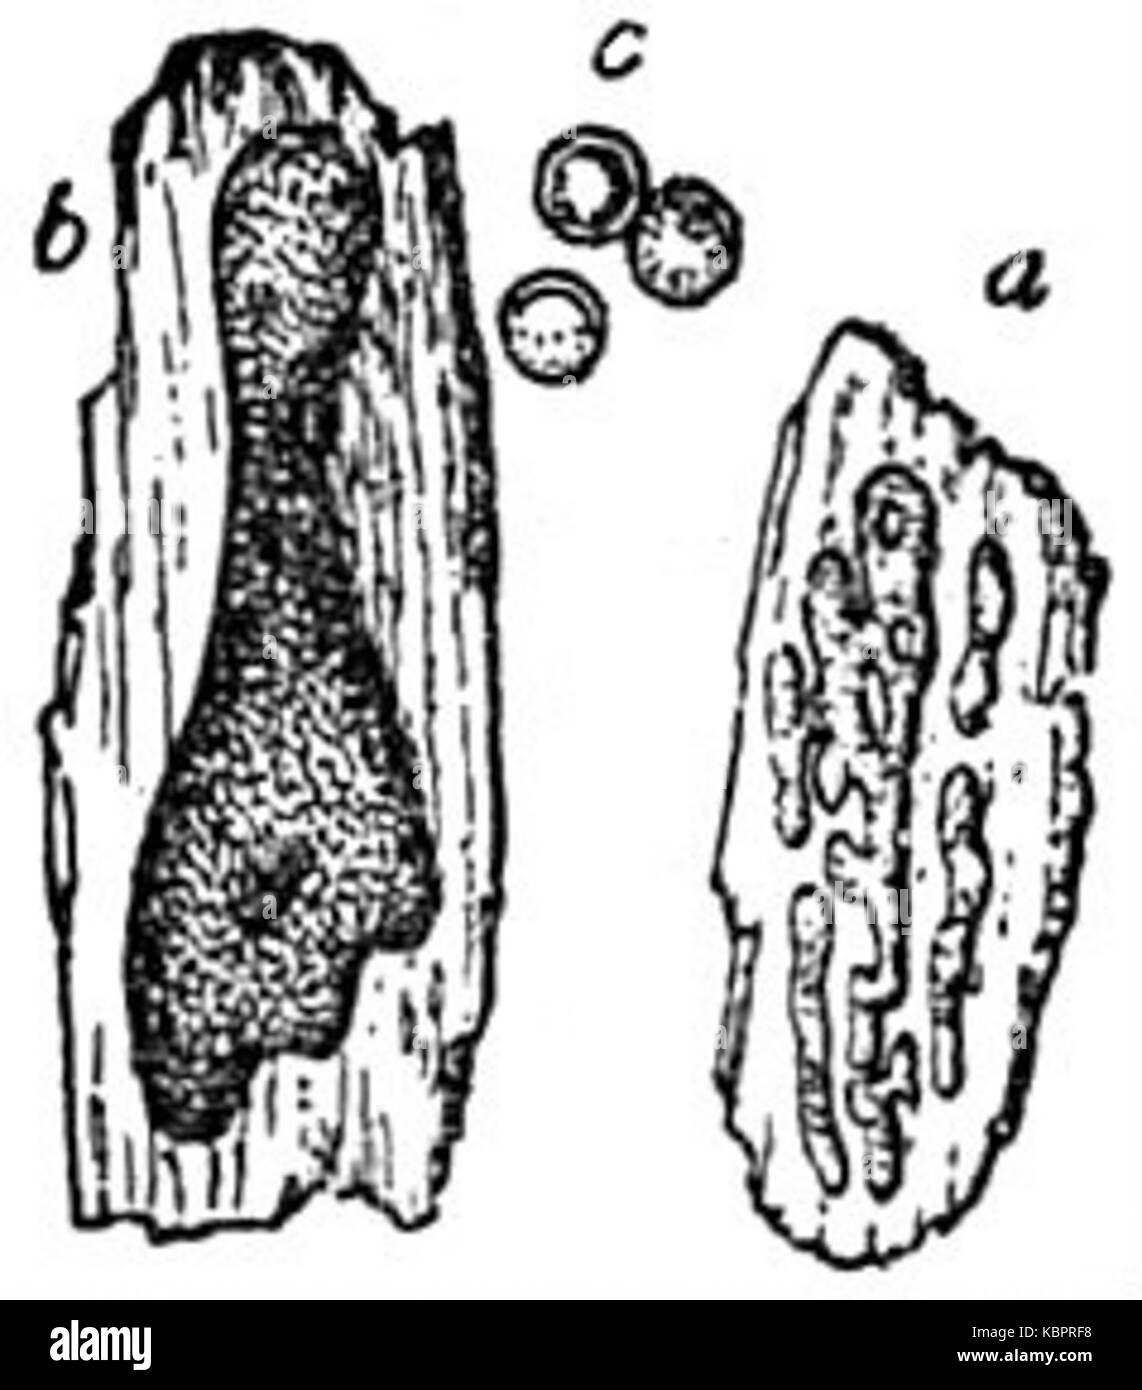 EB1911 Mycetozoa   Licea flexuosa Stock Photo